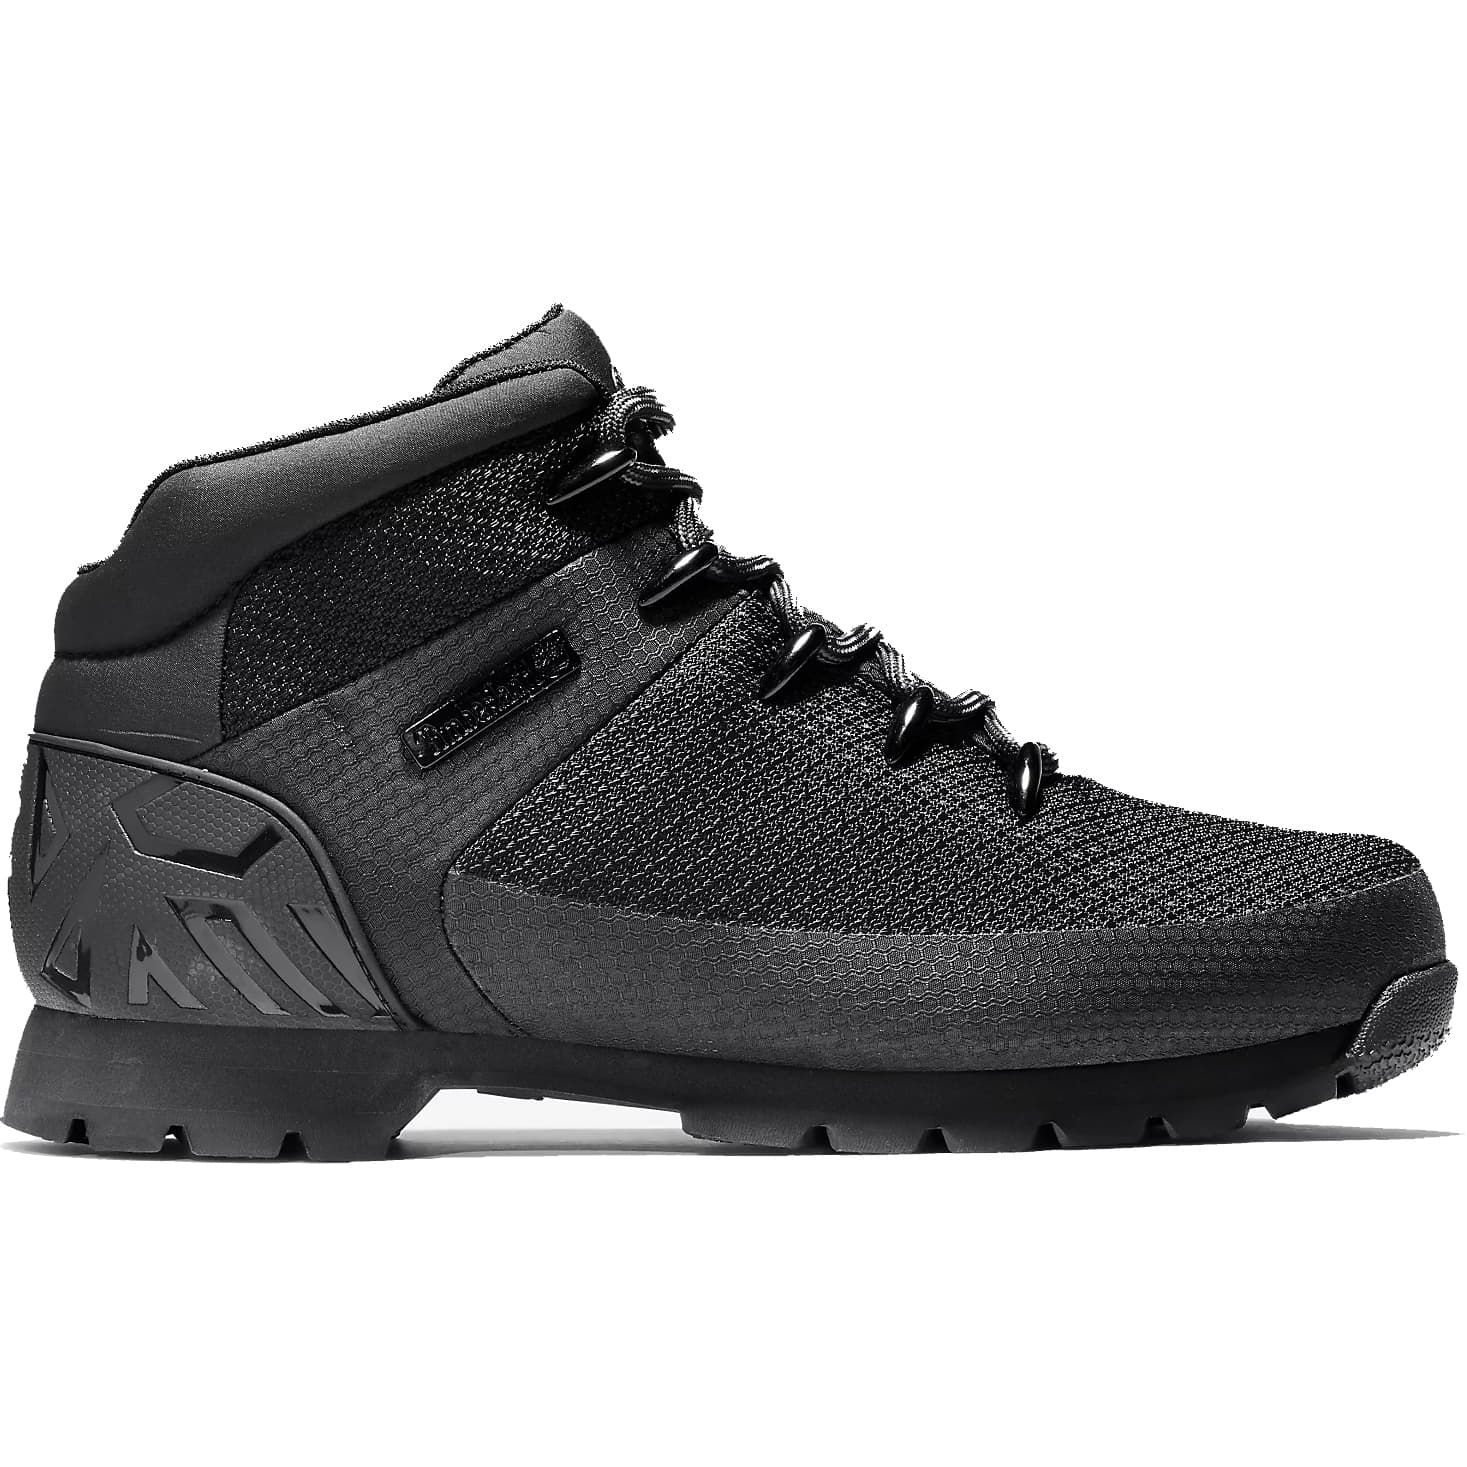 Timberland Mens Euro Sprint Waterproof Walking Chukka Ankle Boots - UK 9 Black 2951